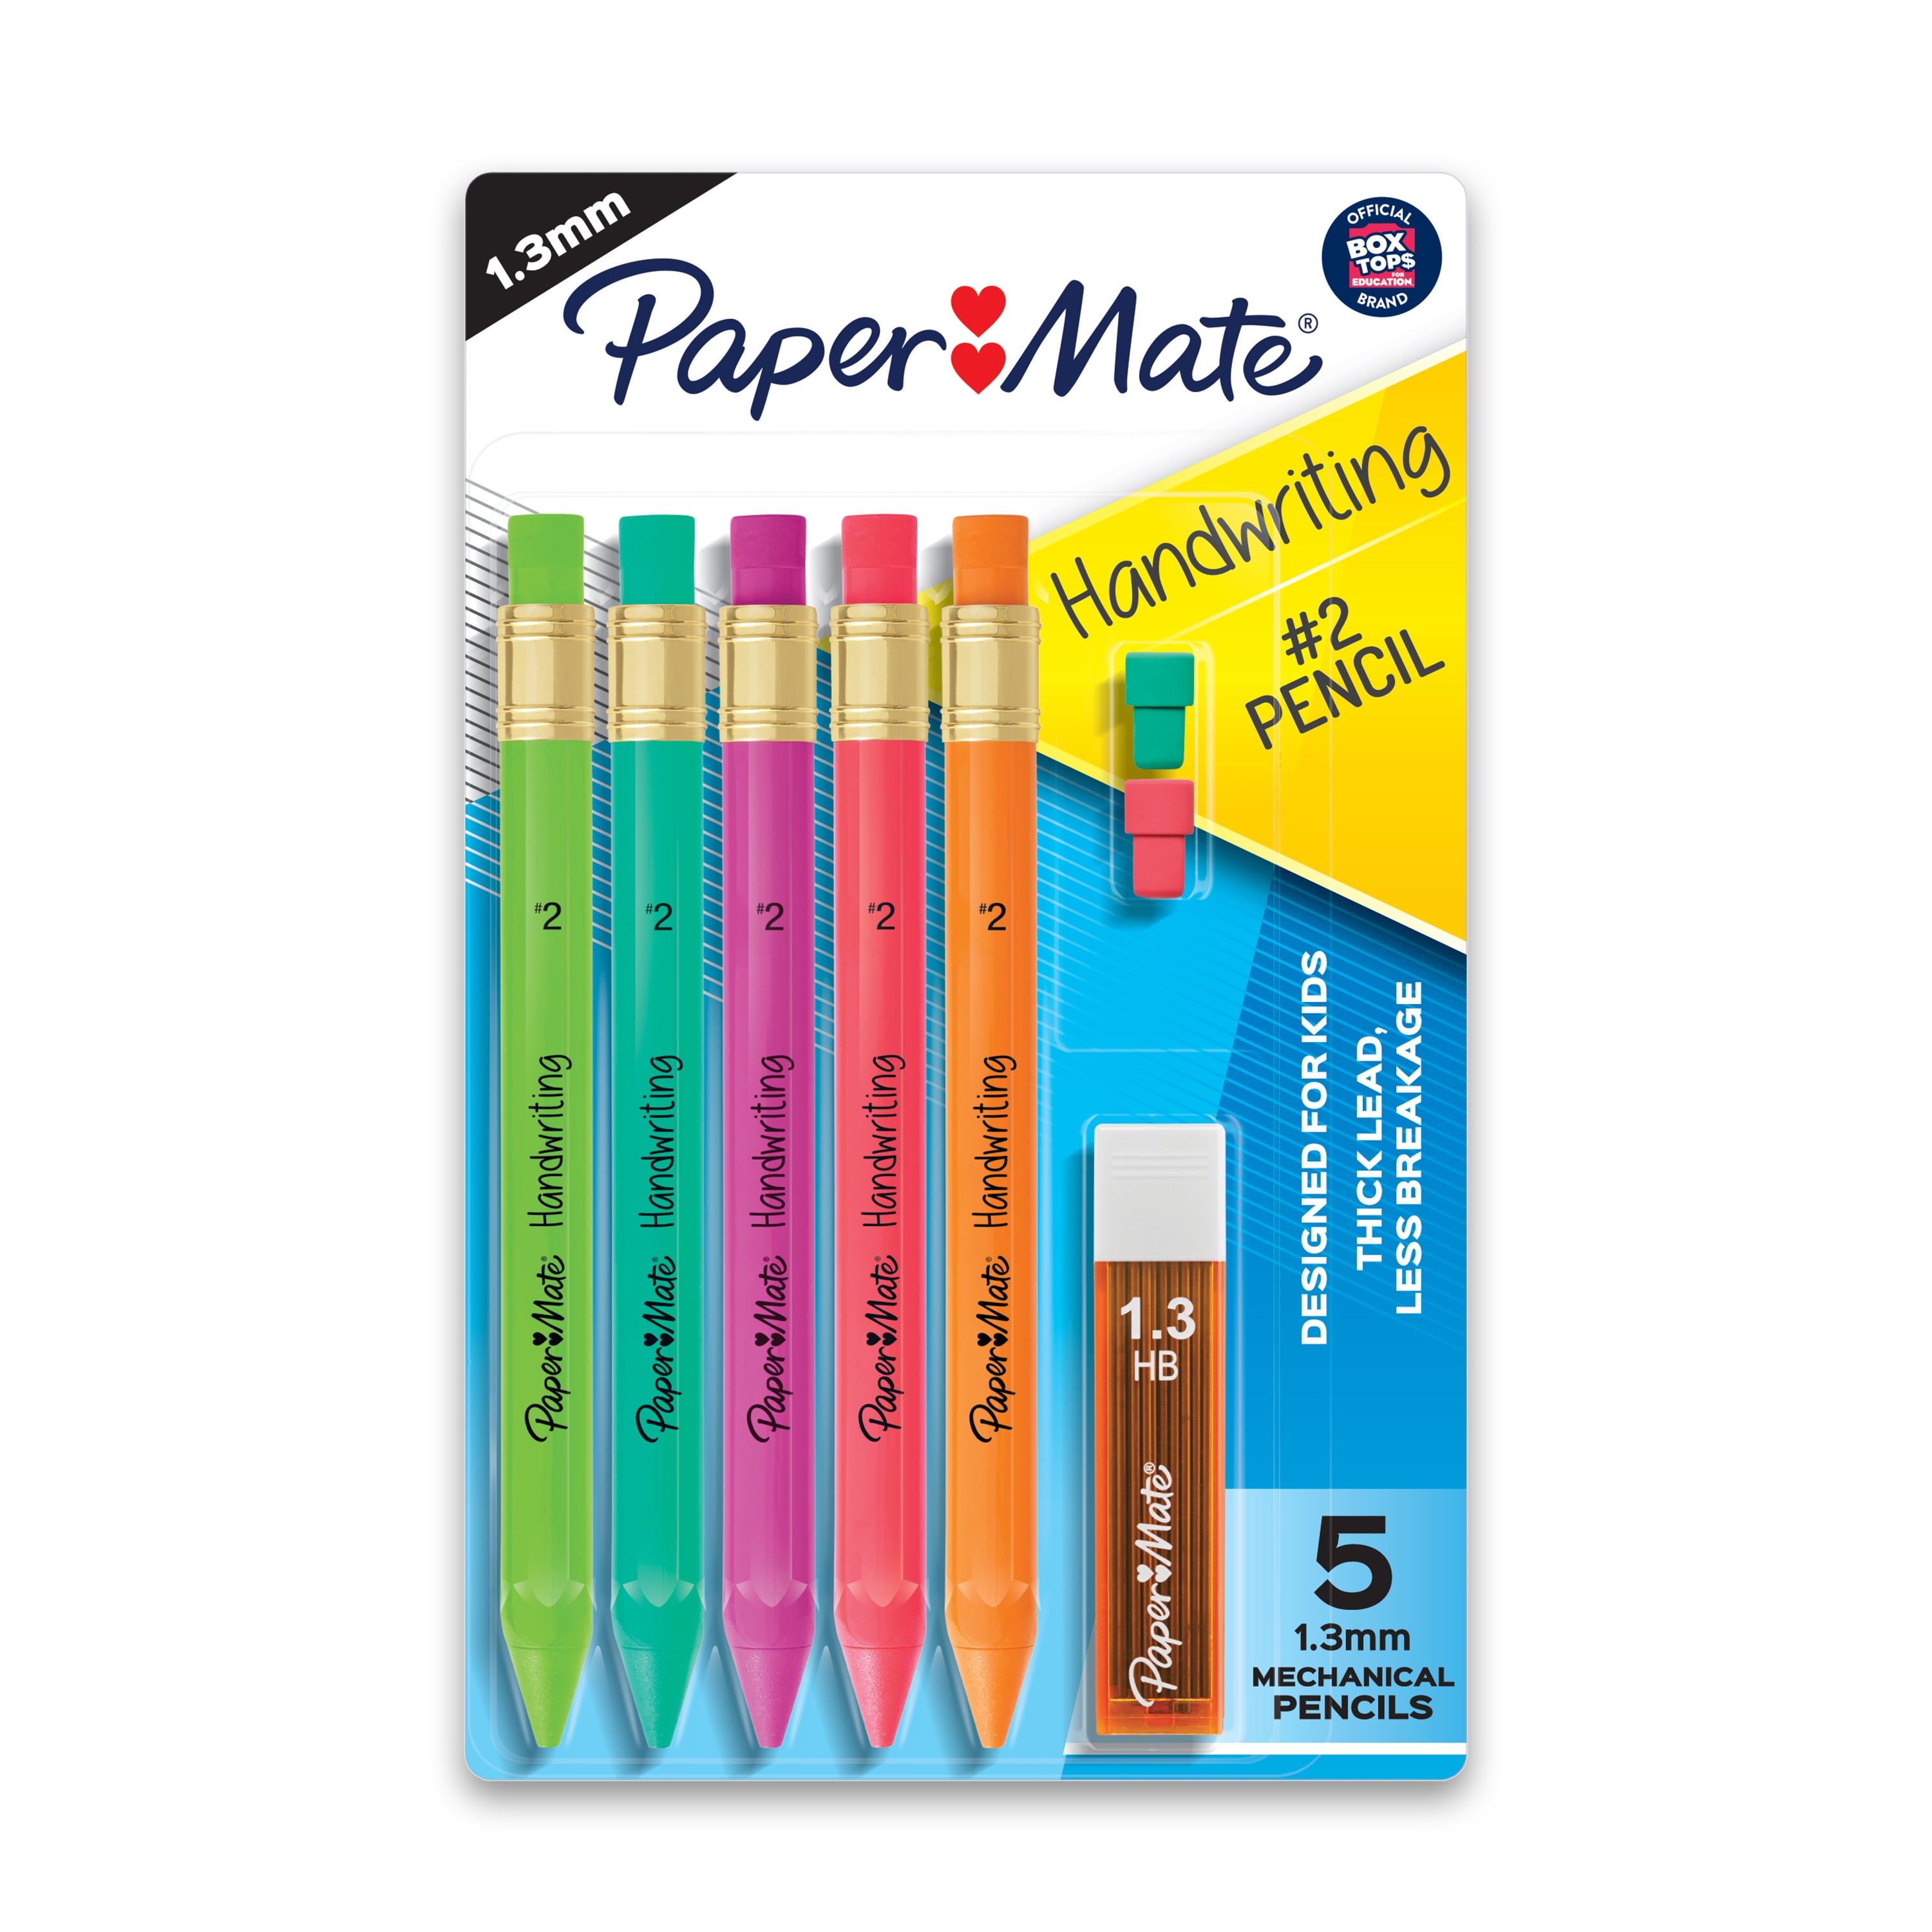 Paper Mate Handwriting Triangular Mechanical Pencils, HB #2 Lead